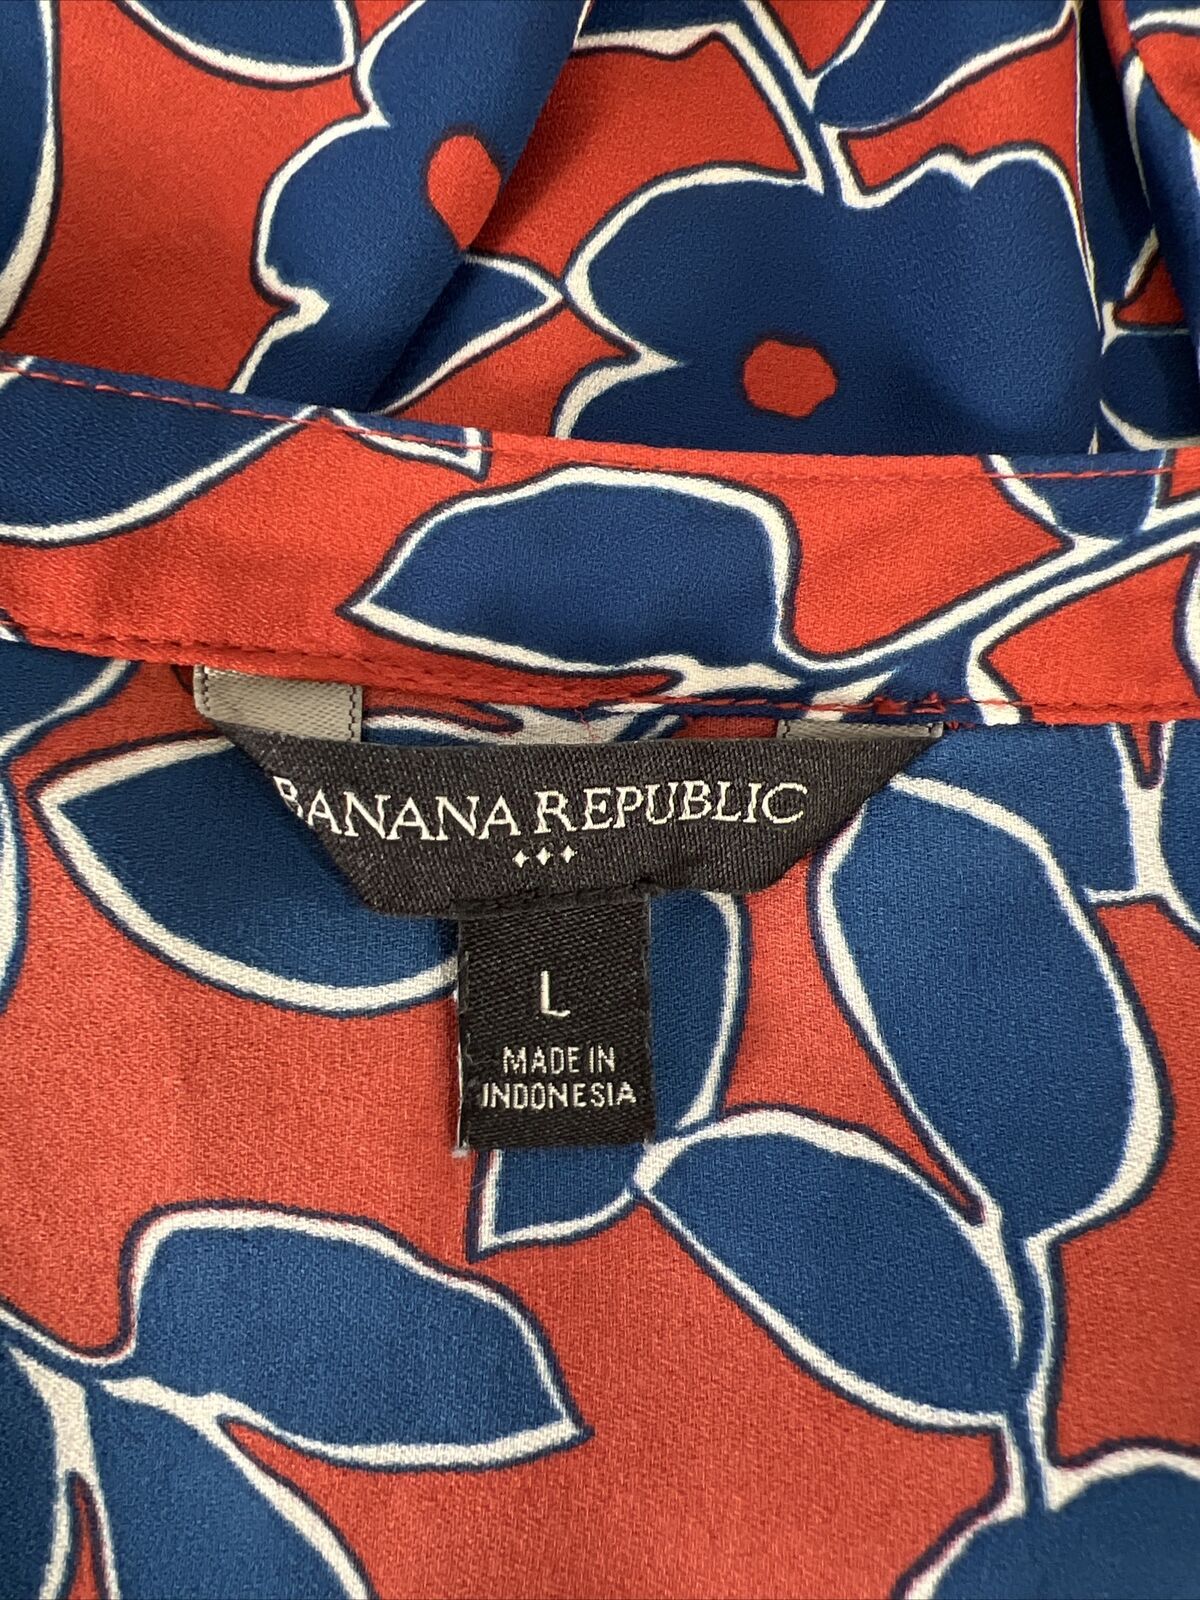 Banana Republic Women's Red/Blue V-Neck Floral Sheer Blouse - L